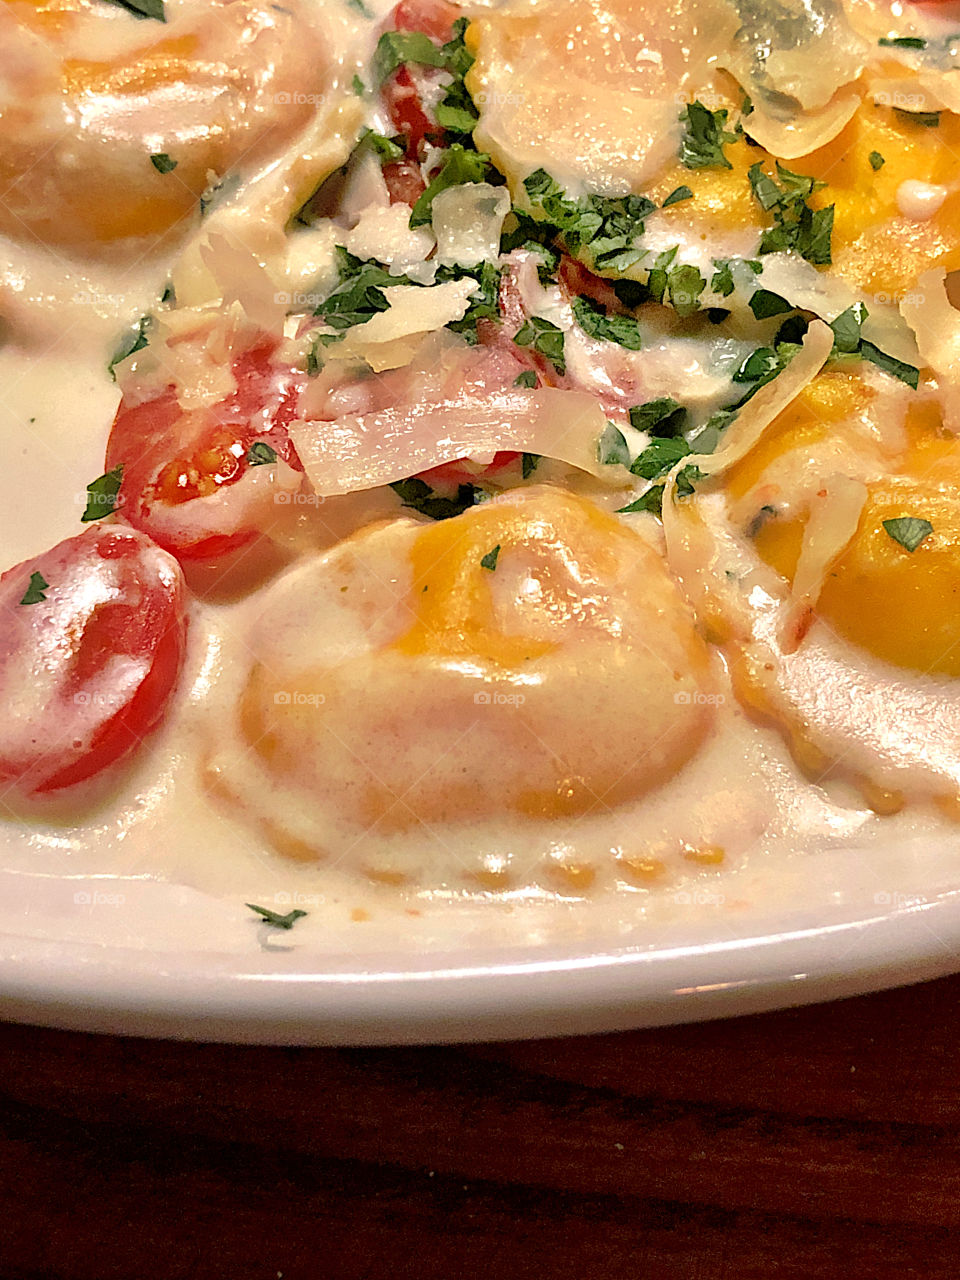 "Lobster Ravioli" - a savory restaurant-prepared meal up close 